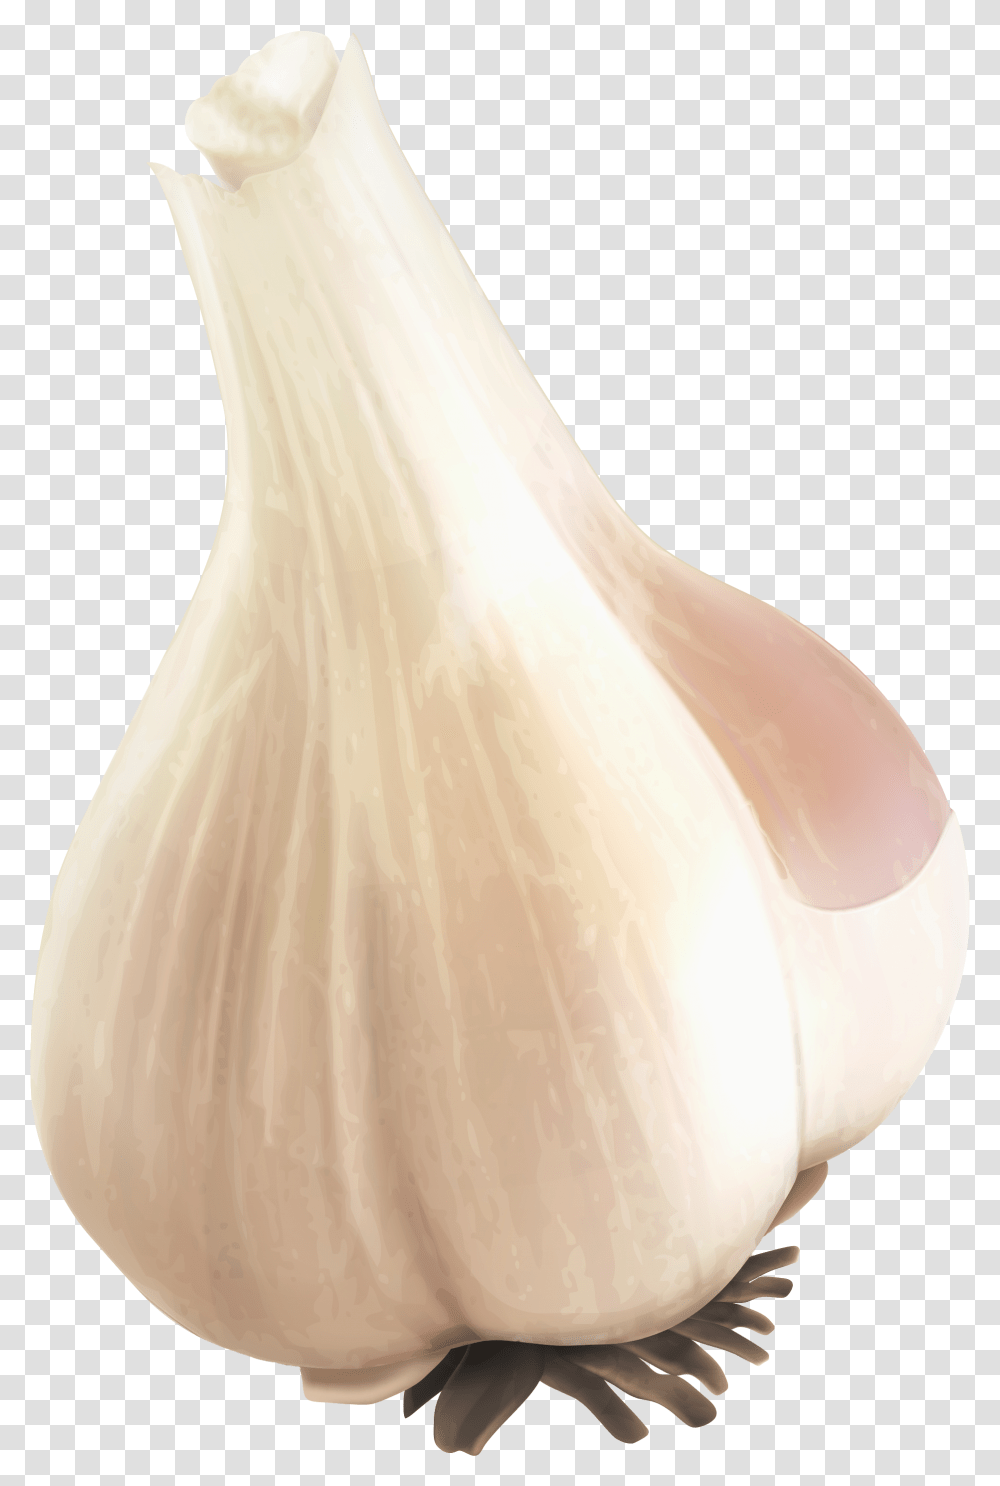 Garlic Image Garlic, Plant, Vegetable, Food, Wedding Gown Transparent Png